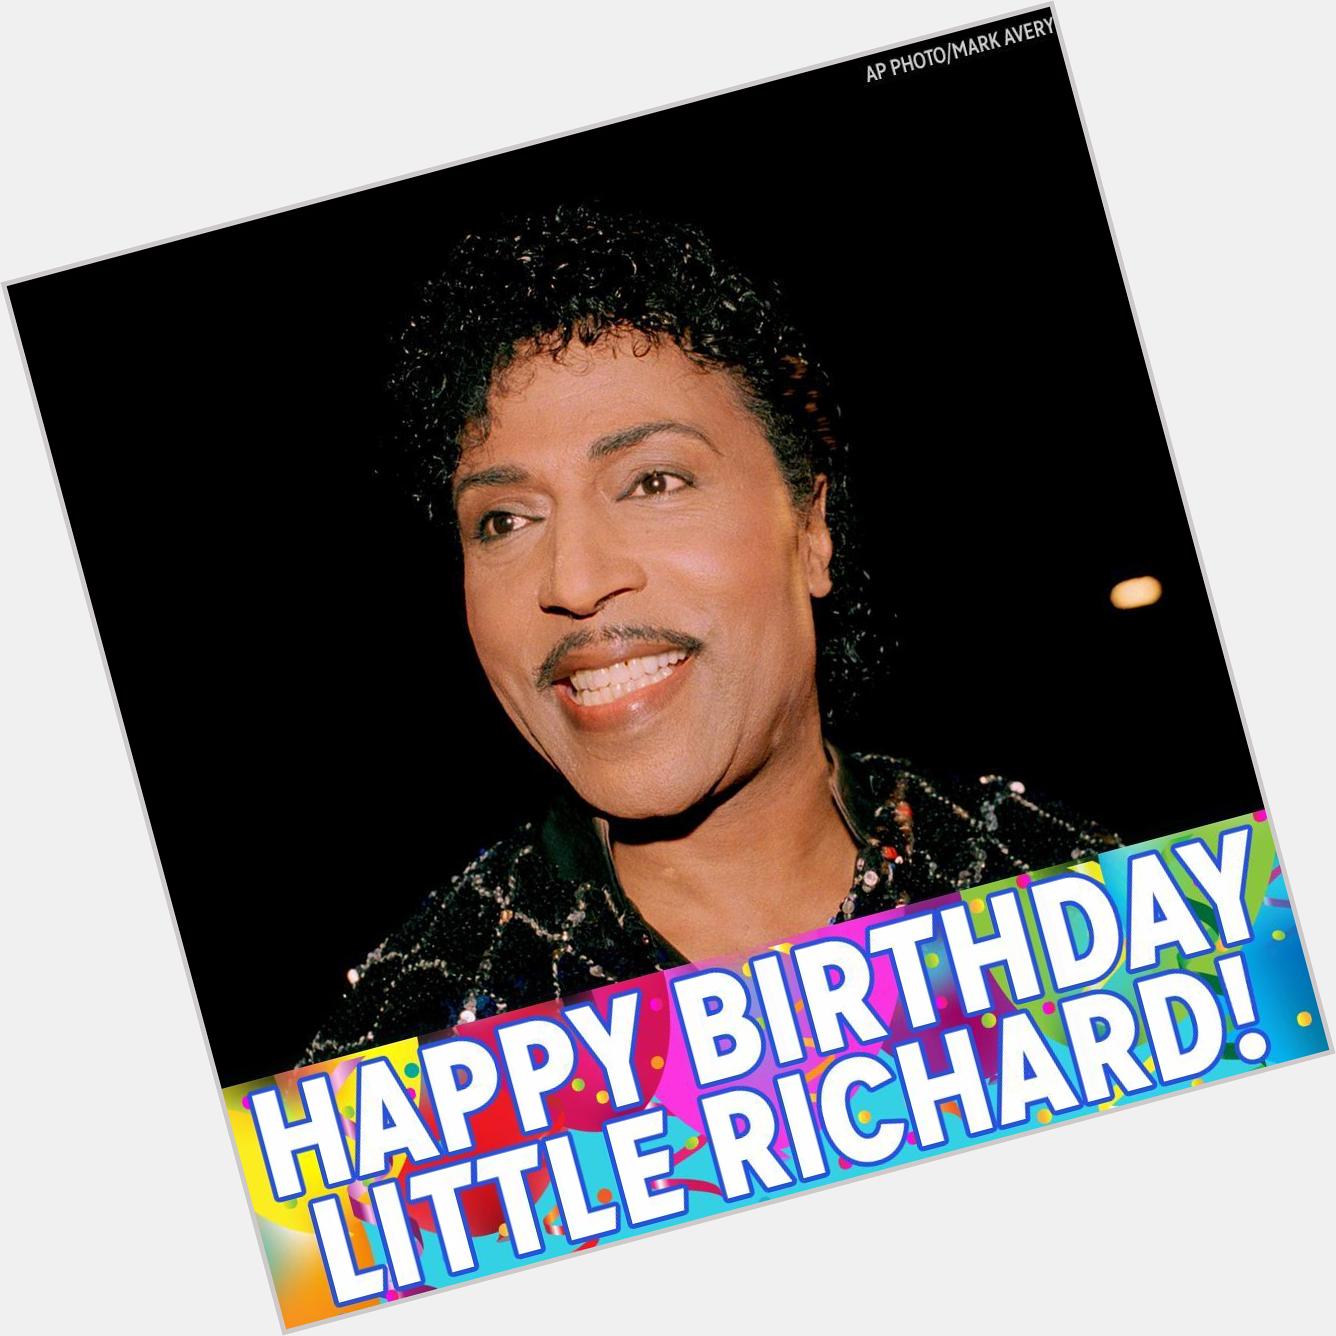 Wop-bop-a-loo-mop alop-bom-bom! Wishing Little Richard a Happy Birthday! 